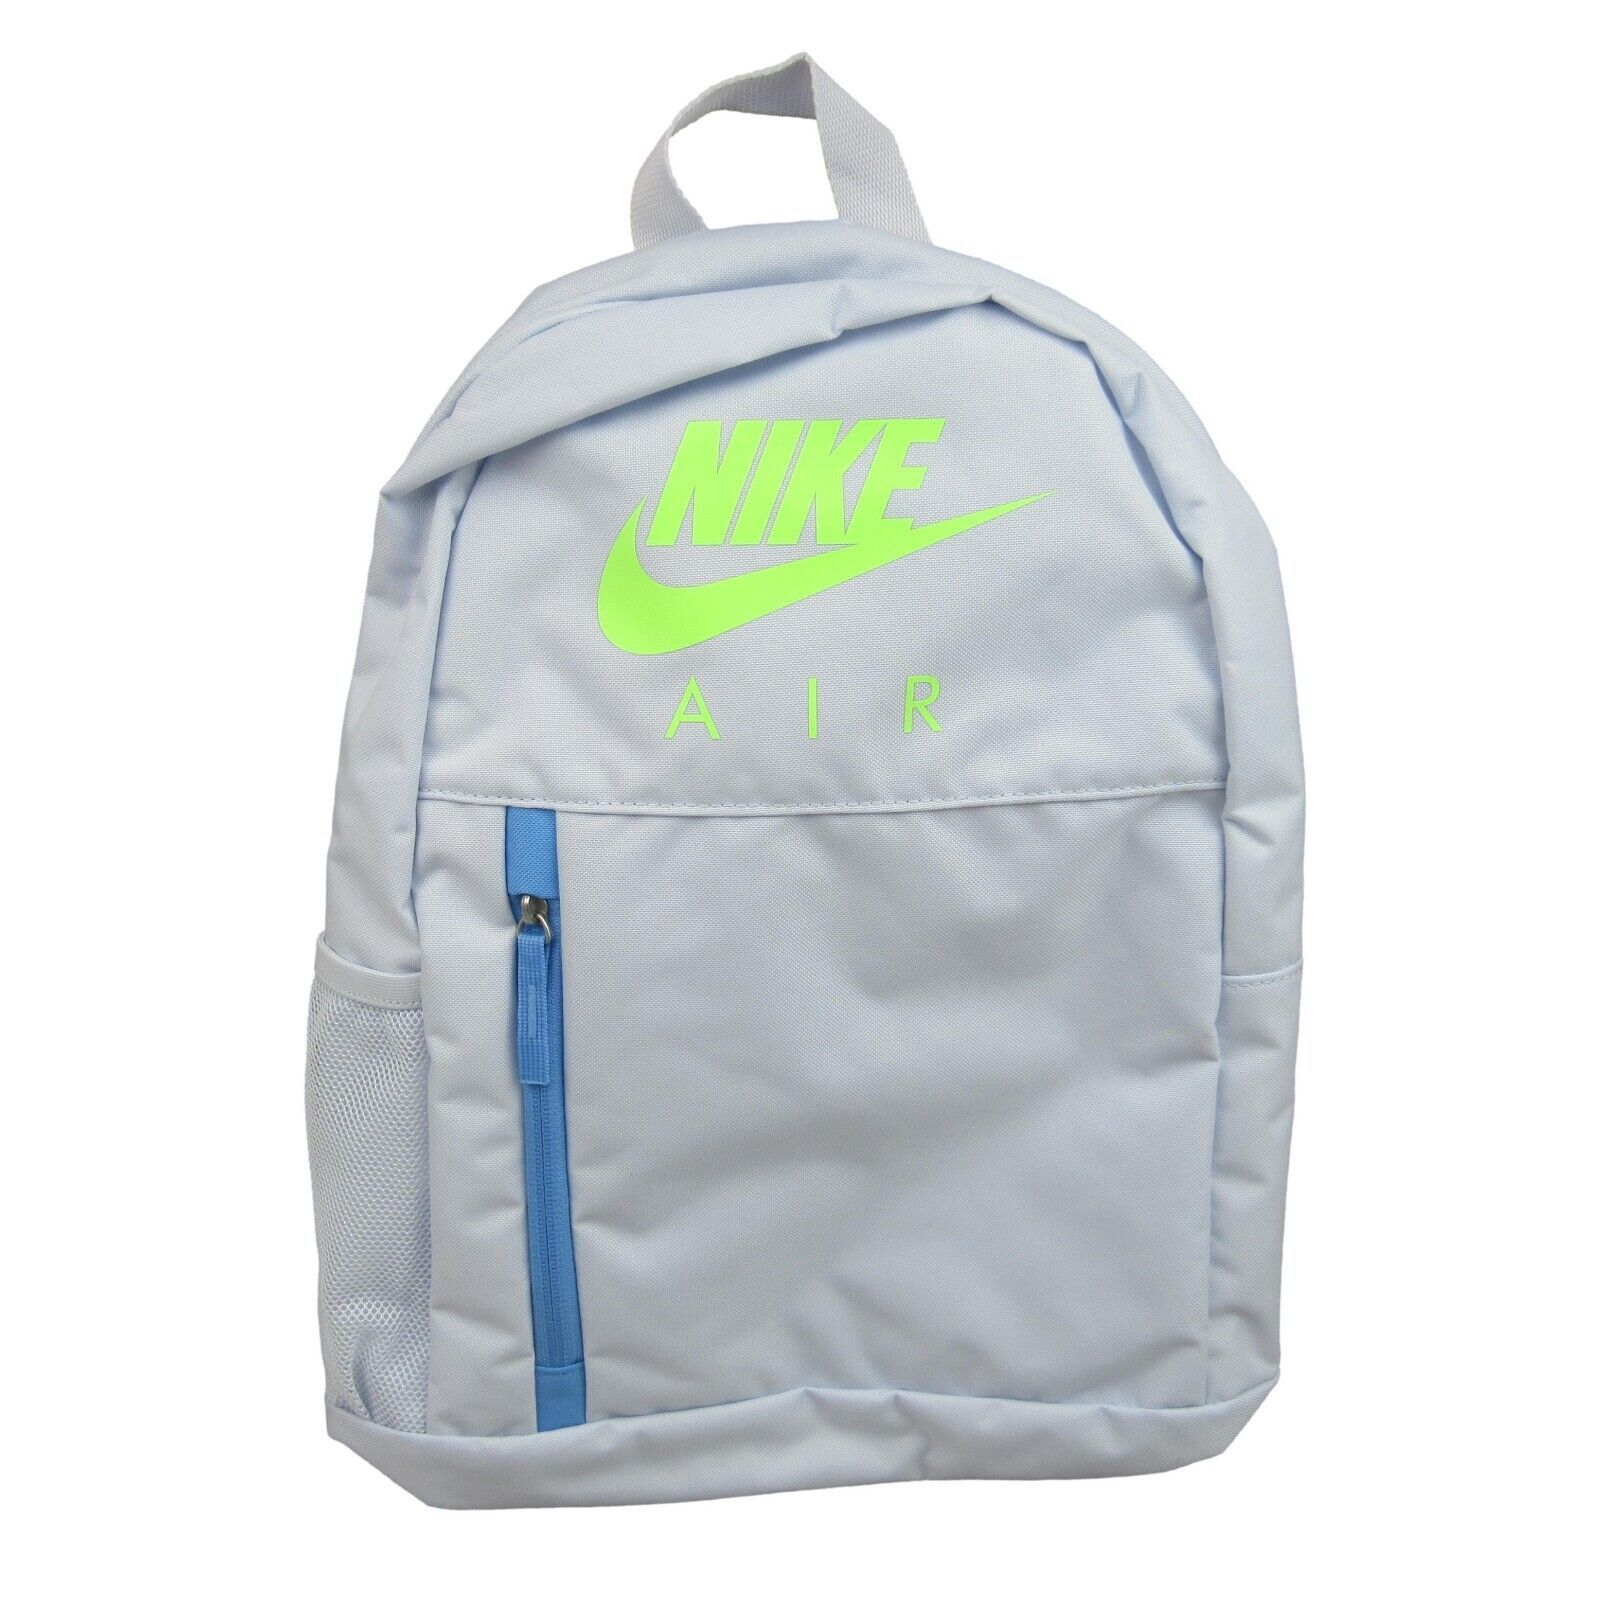 Nike Elemental Kids Backpack School Travel w/ Pencil Bag Blue 20L NEW BA6032-086 - $29.95